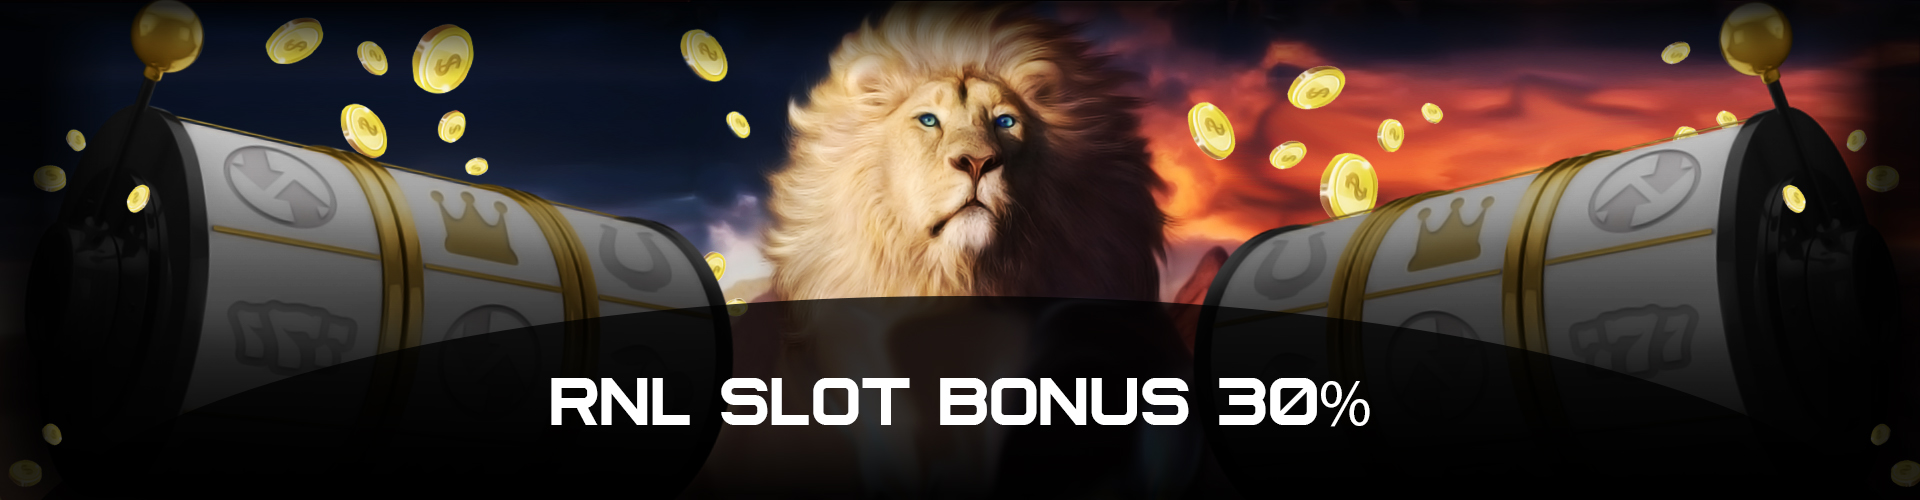 Online Casino Malaysia RNL Slot Bonus 30%